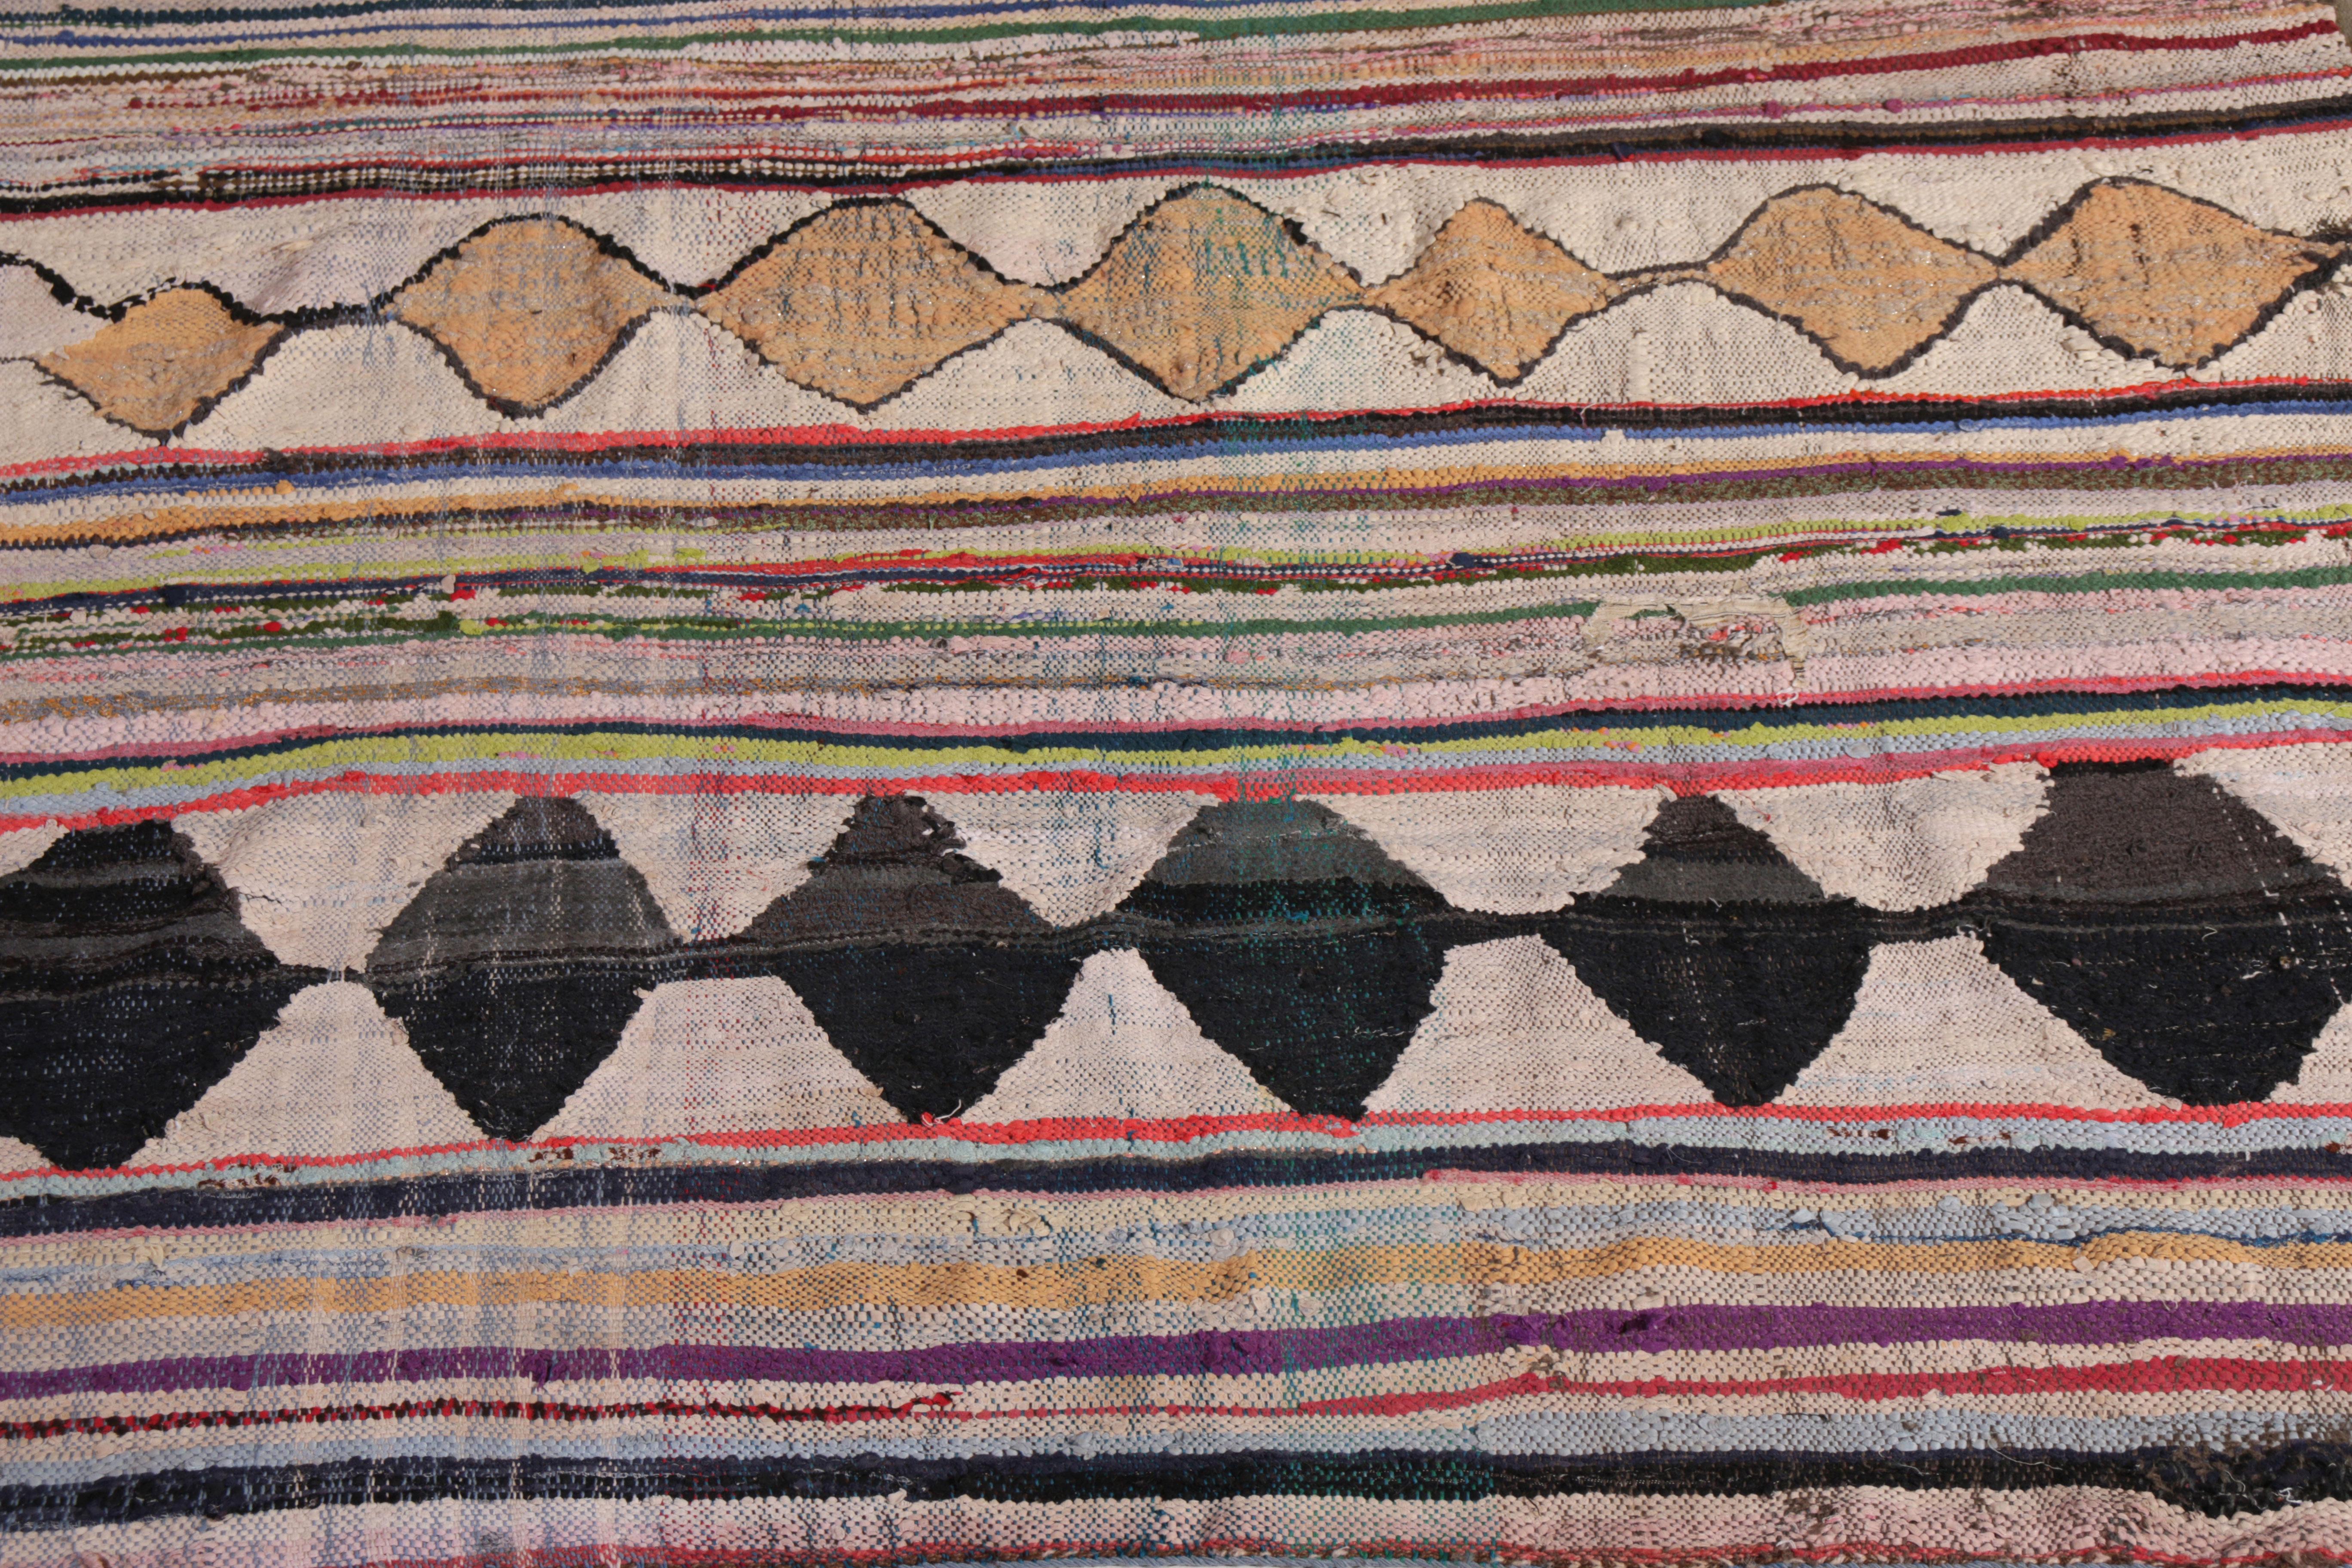 Hand-Woven 1950s Midcentury Moroccan Flat-Weave Beige Pink Striped Diamond Tribal Kilim